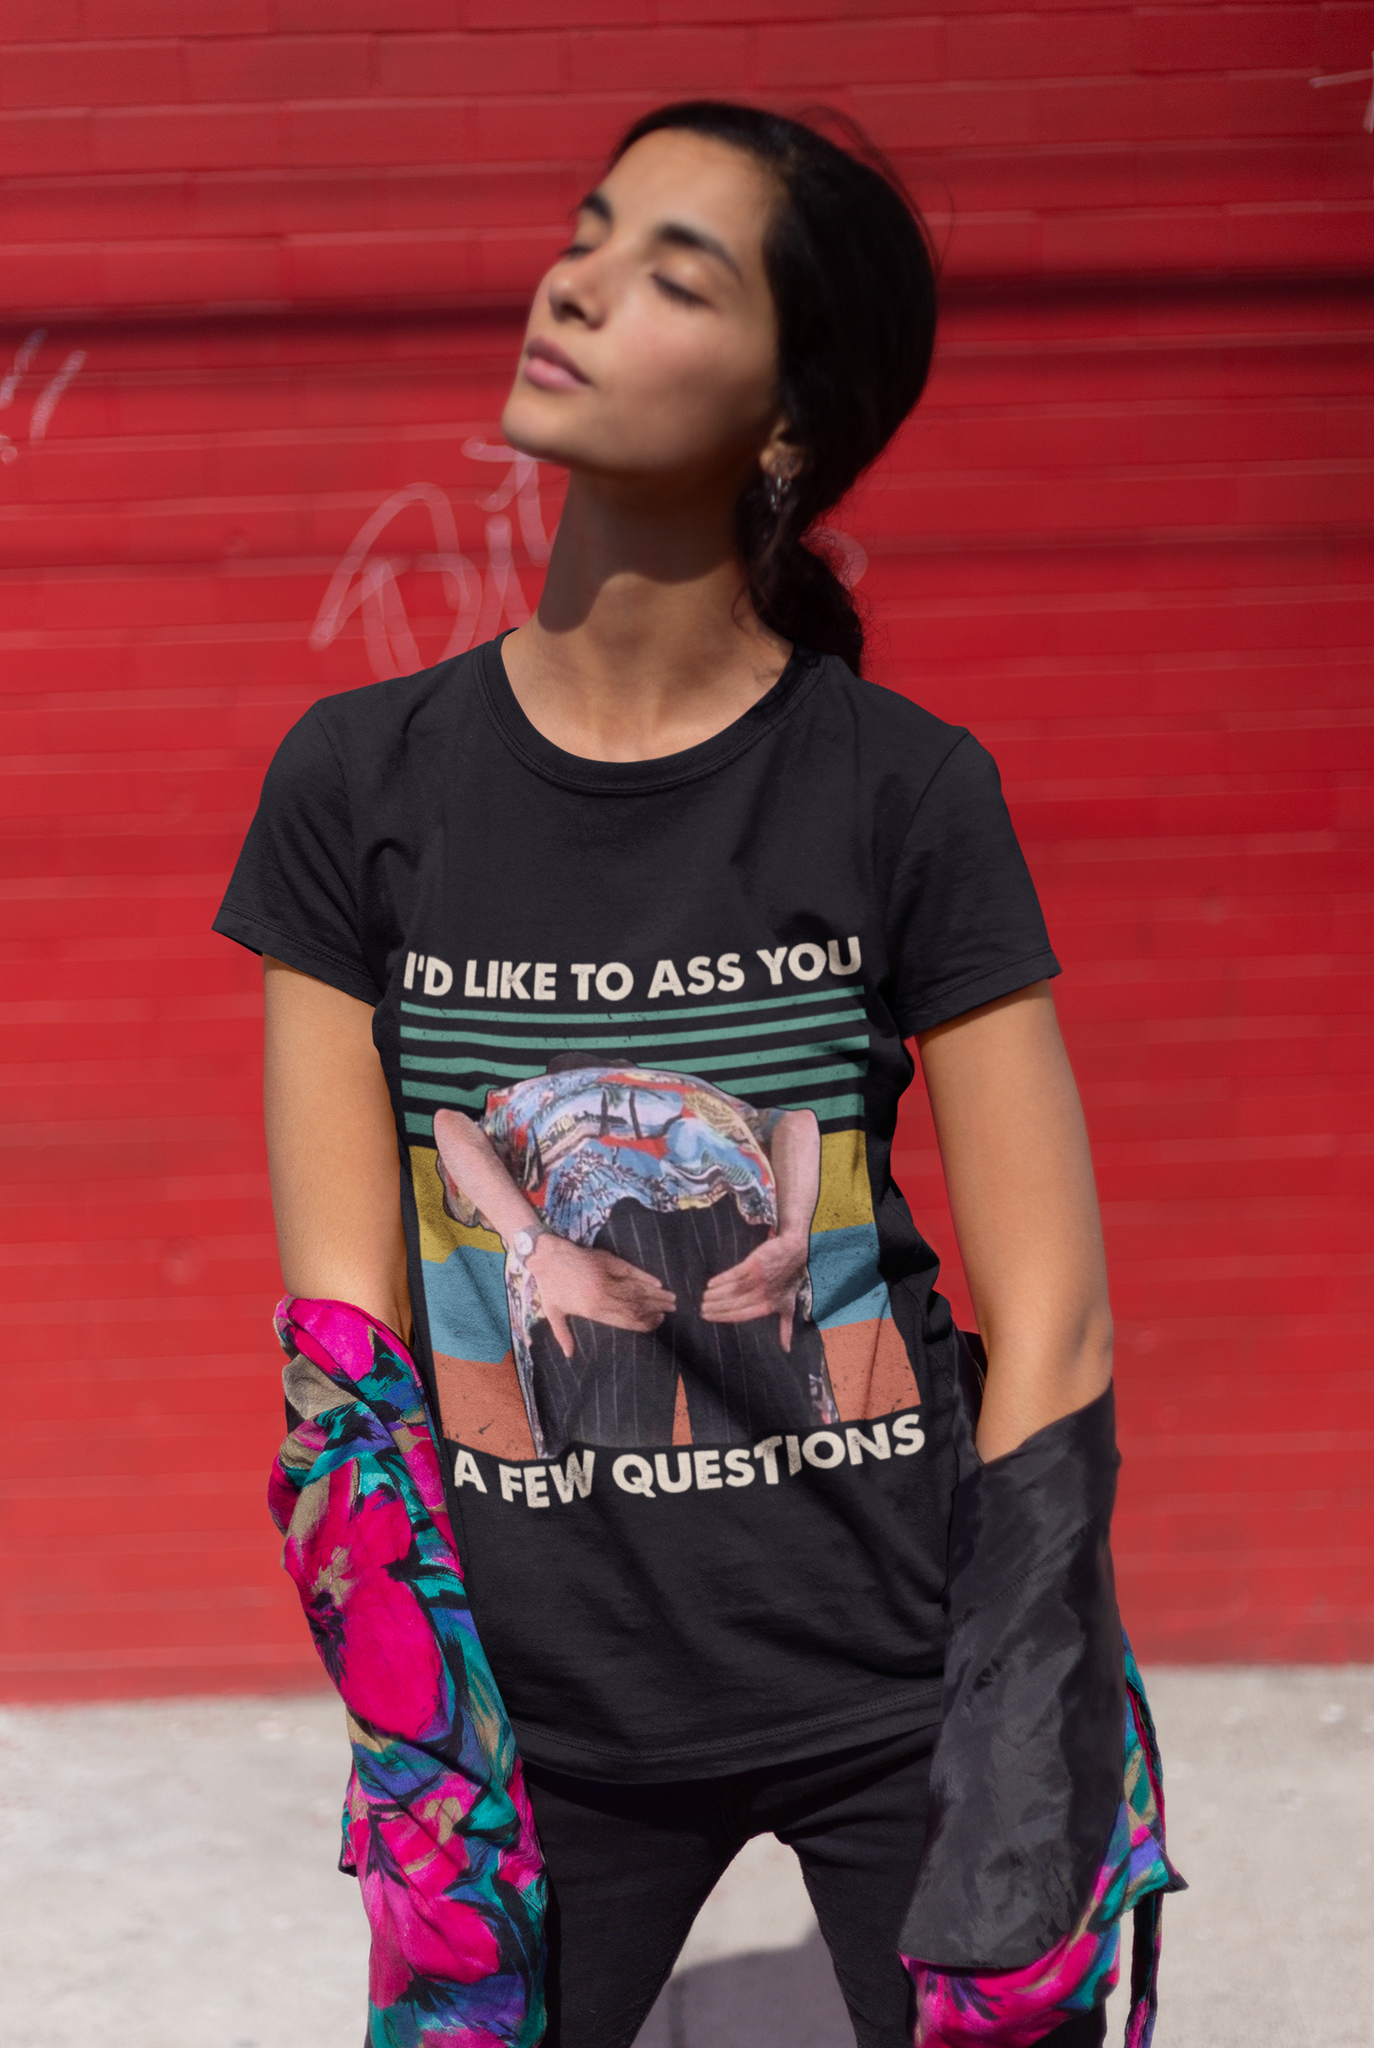 Ace Ventura Pet Detective T Shirt, Ace Ventura T Shirt, Id Like To Ass You A Few Questions Tshirt